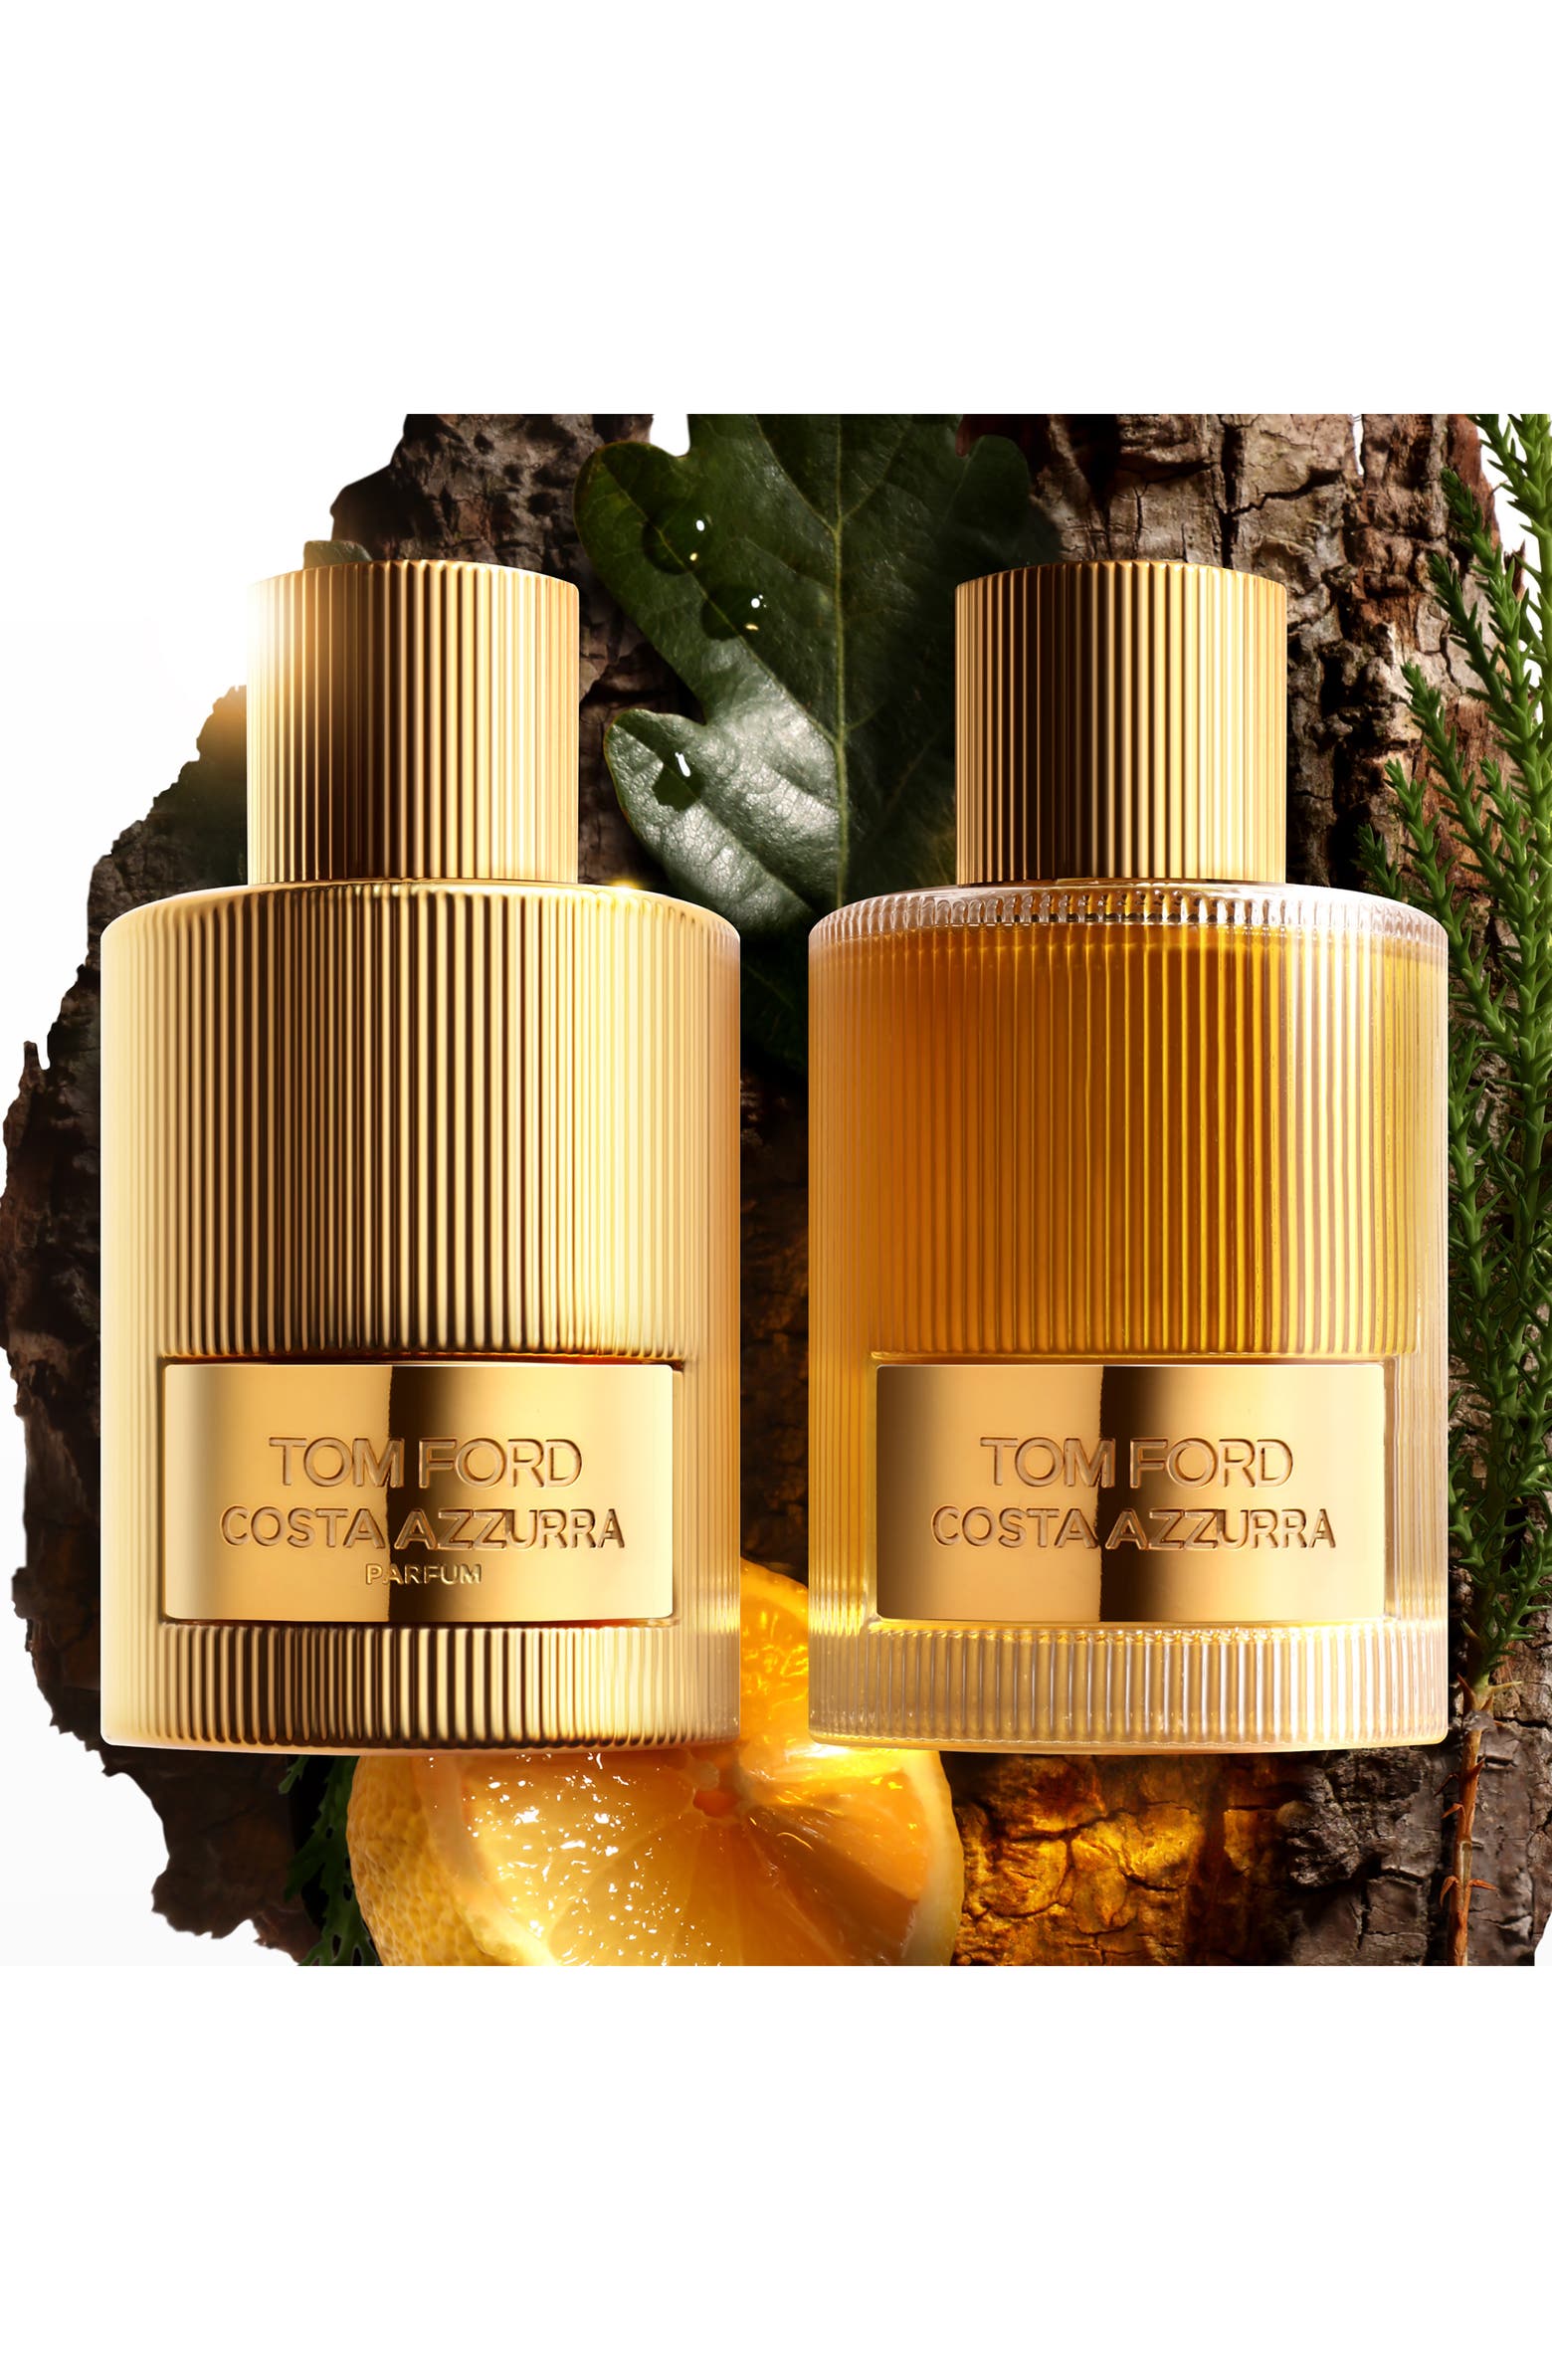 TOM FORD Costa Azzurra Parfum | Nordstrom